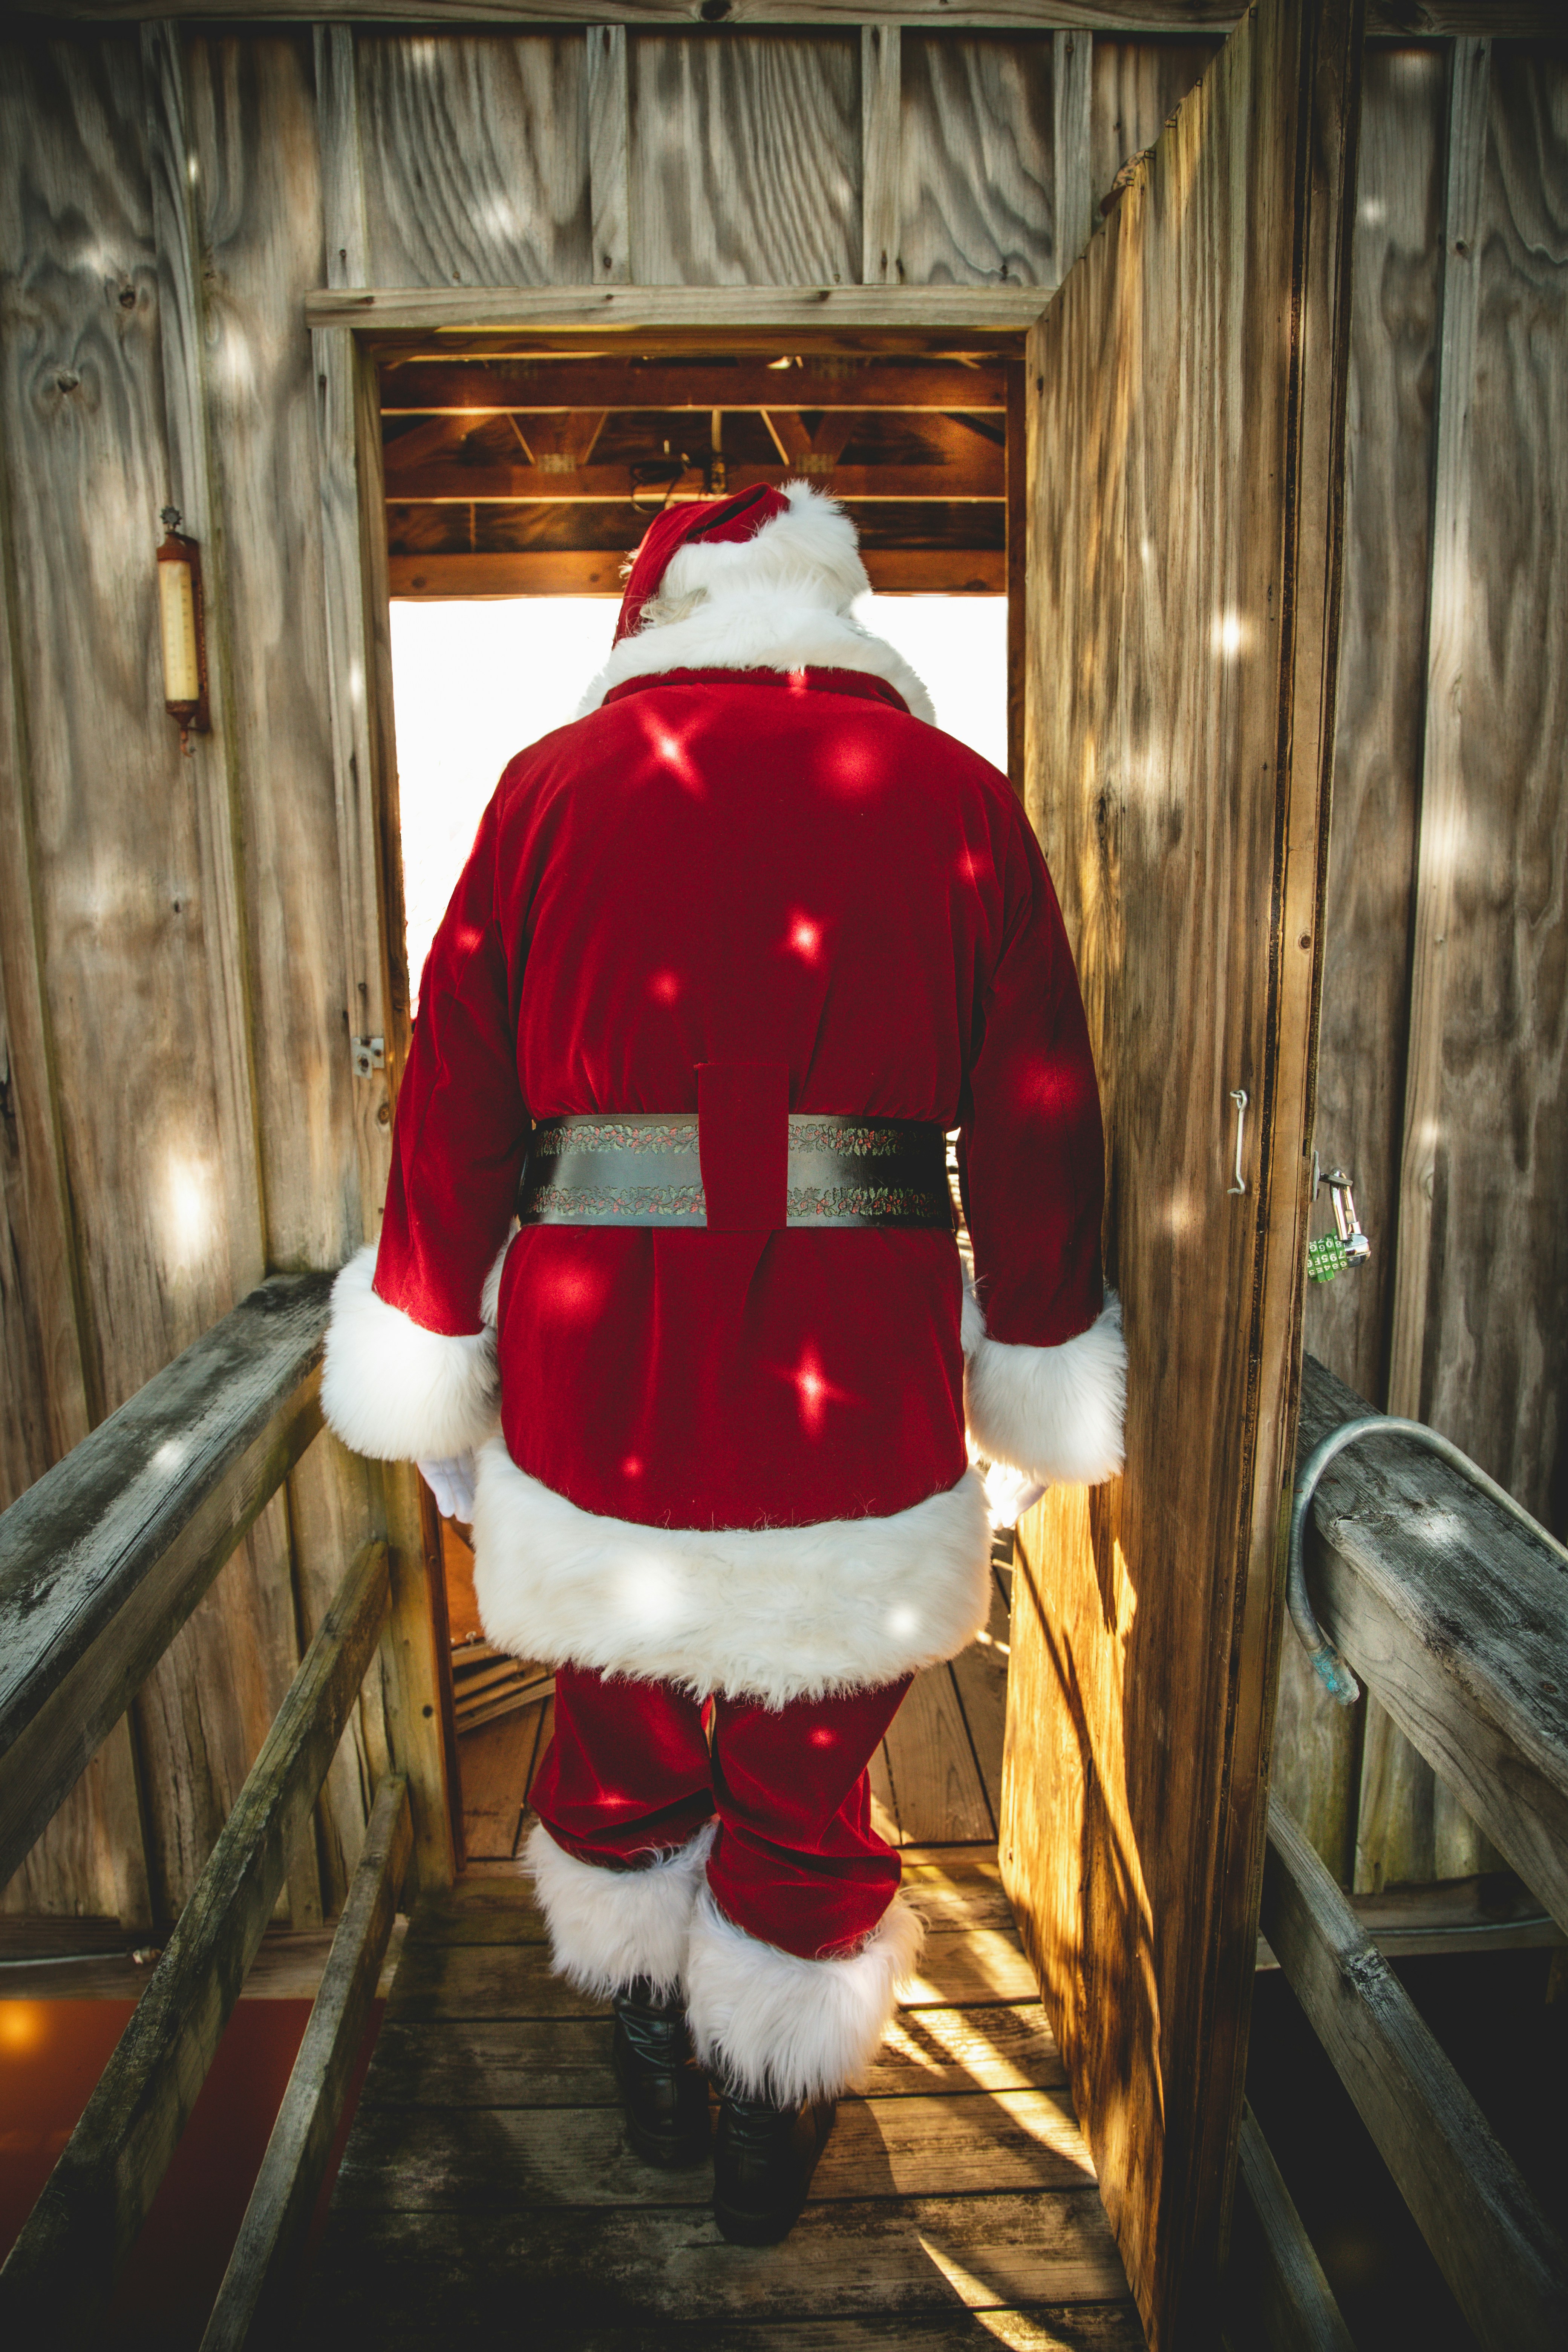 The Magic of Santa! He's coming soon!